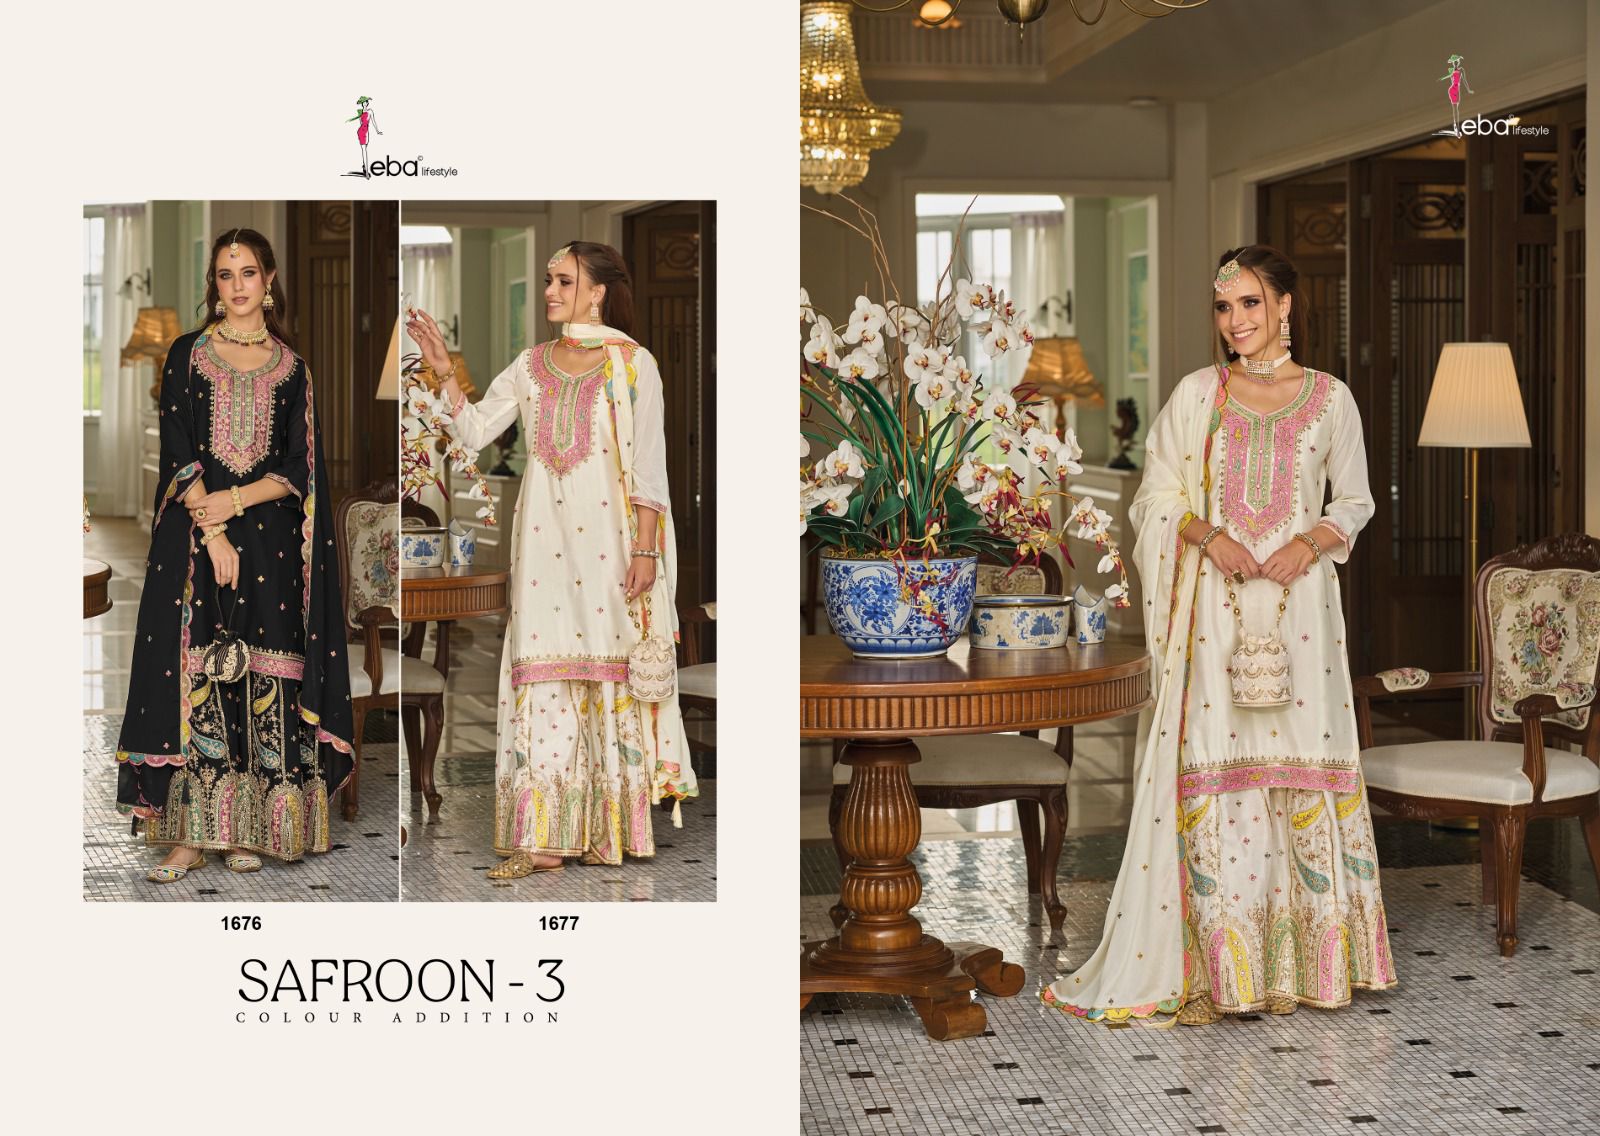 Eba Safroon Vol 3 Colour Addition collection 3